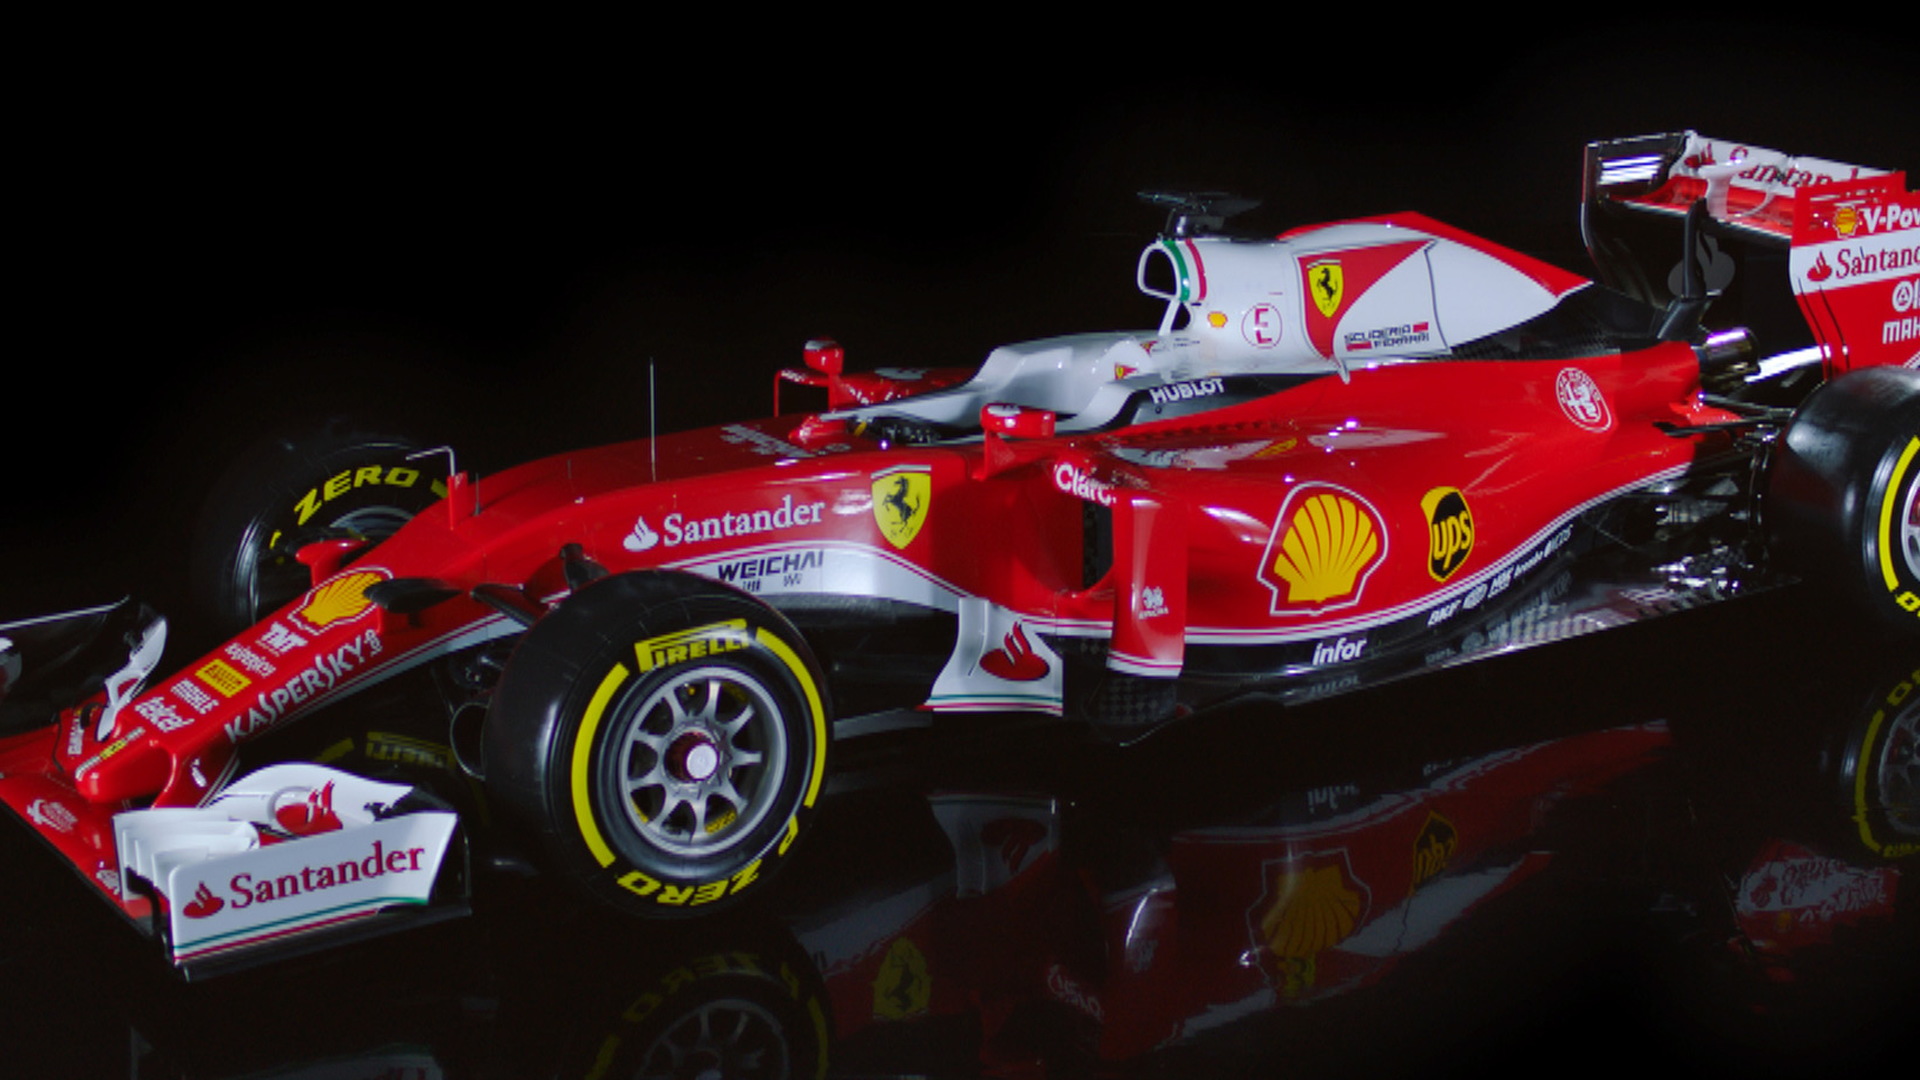 Ferrari SF16-H 2016 Formula One race car